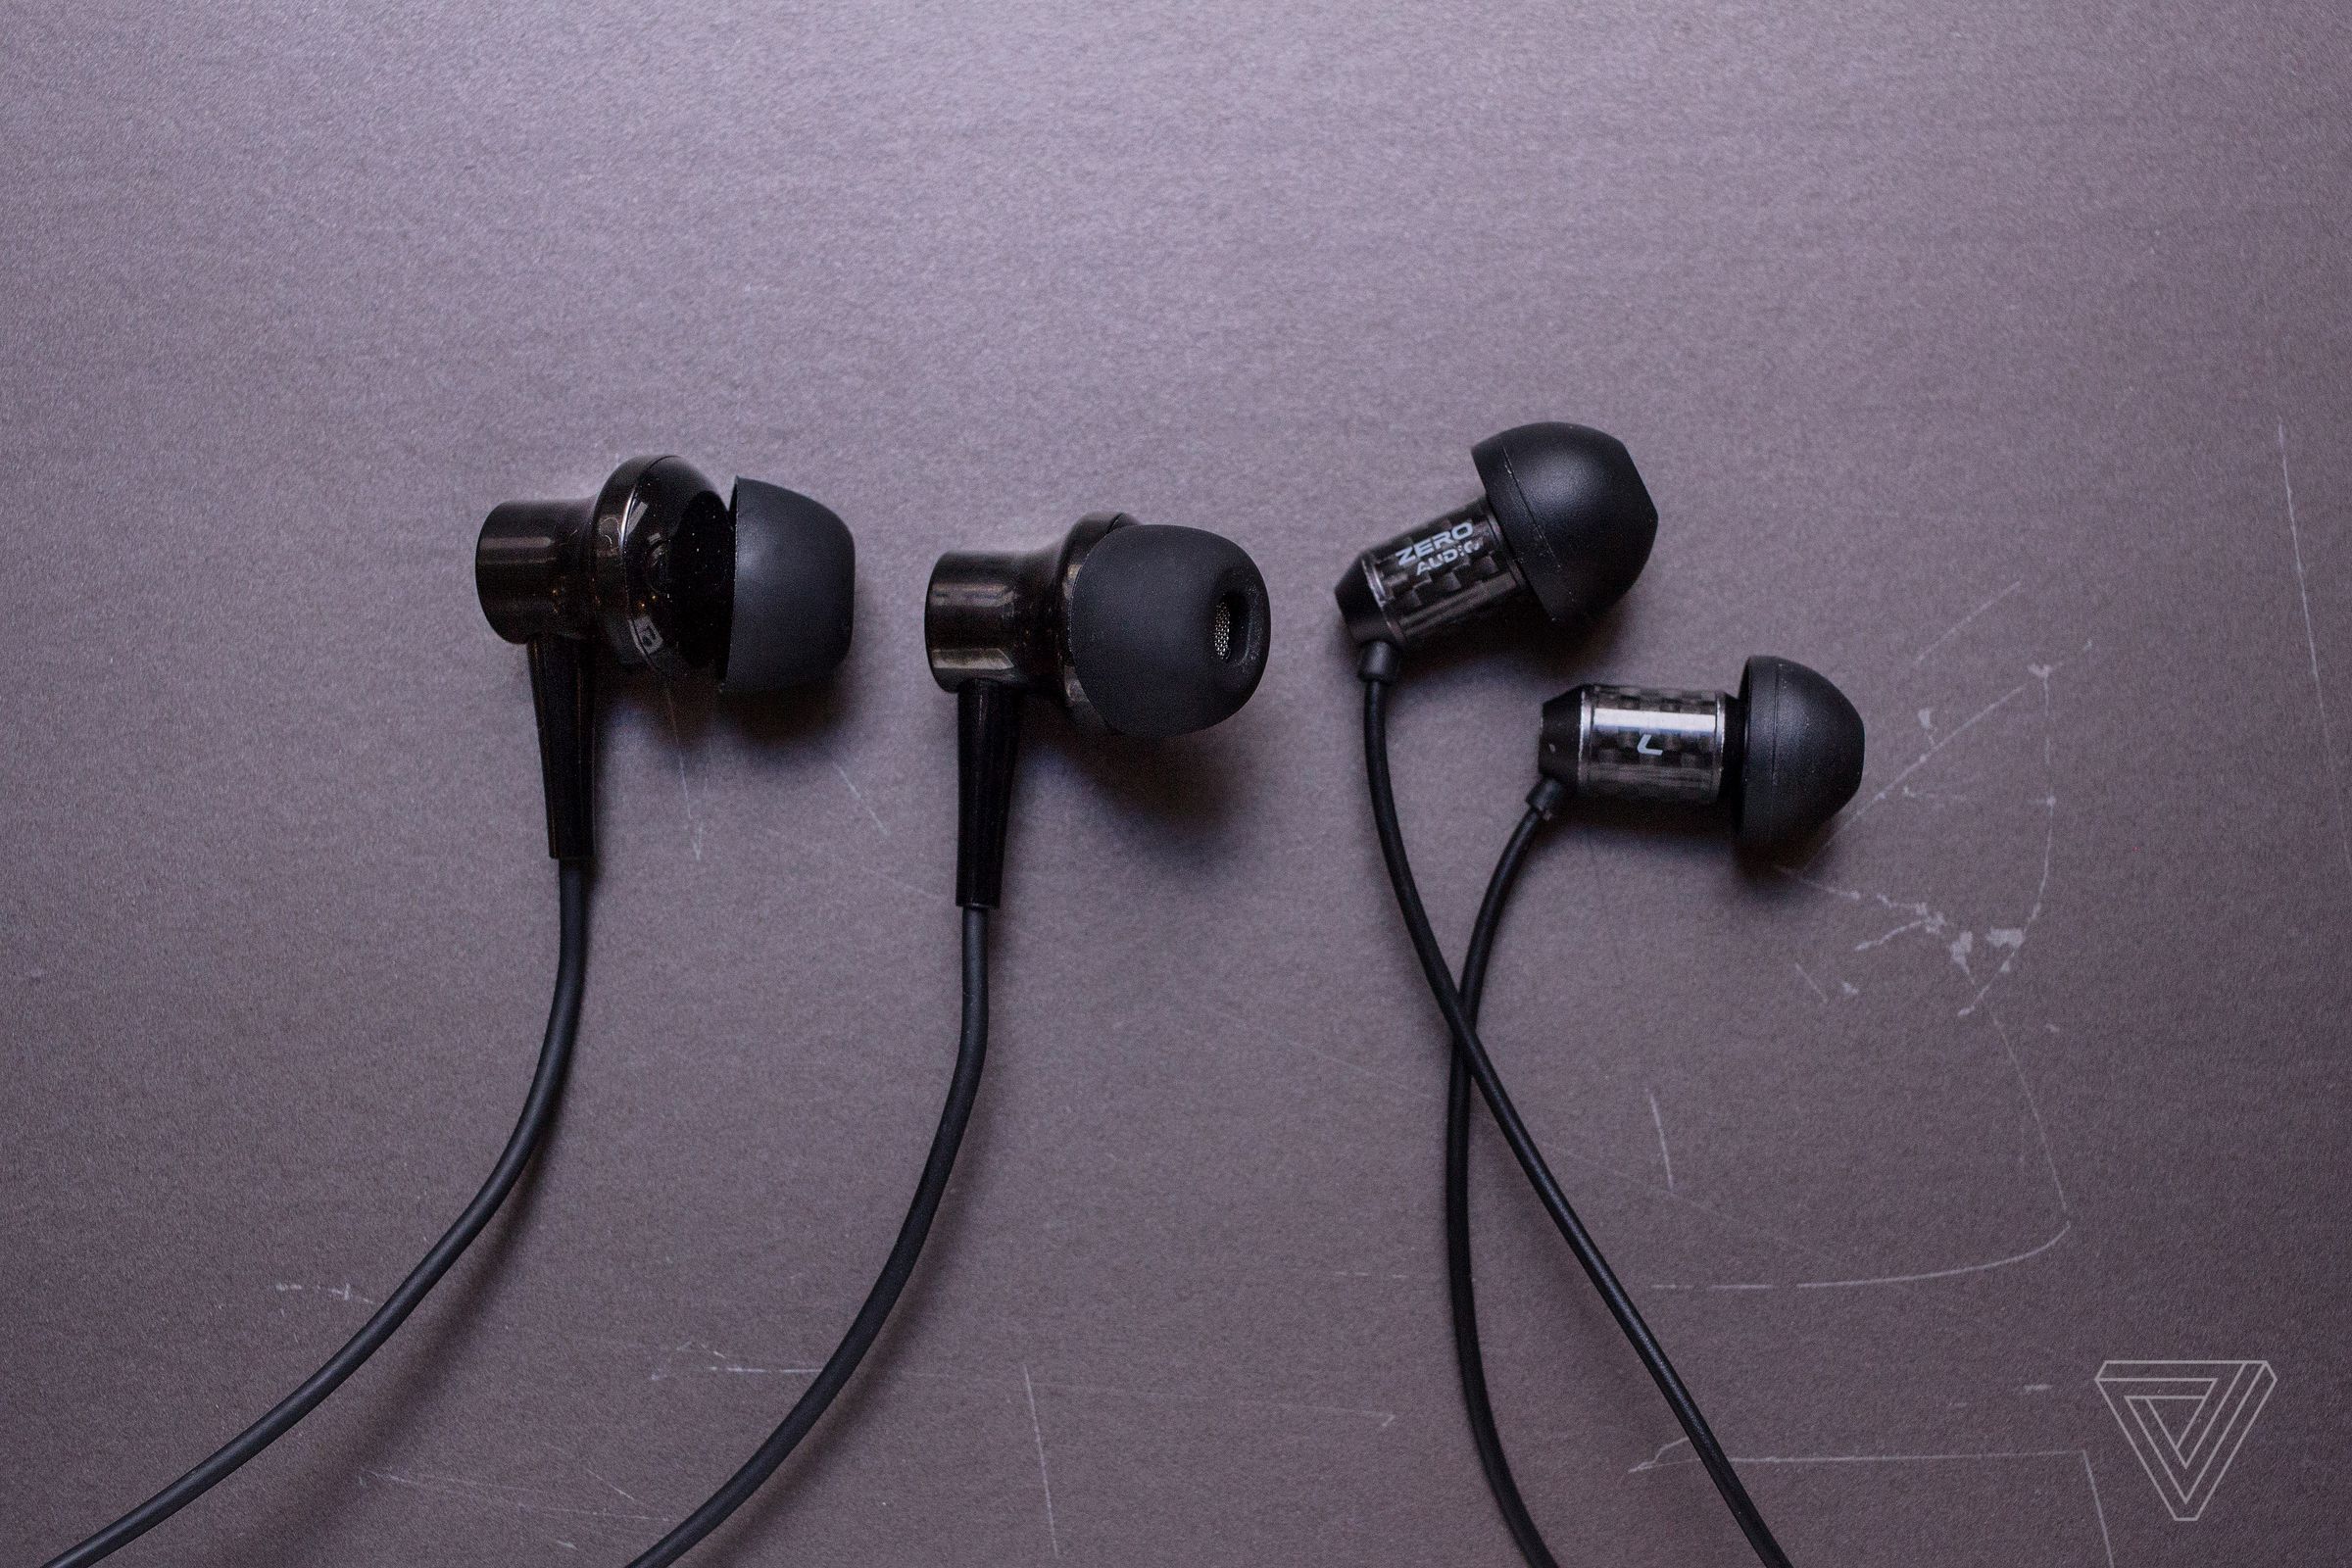 Xiaomi’s earbuds (left) and Zero Audio’s (right).